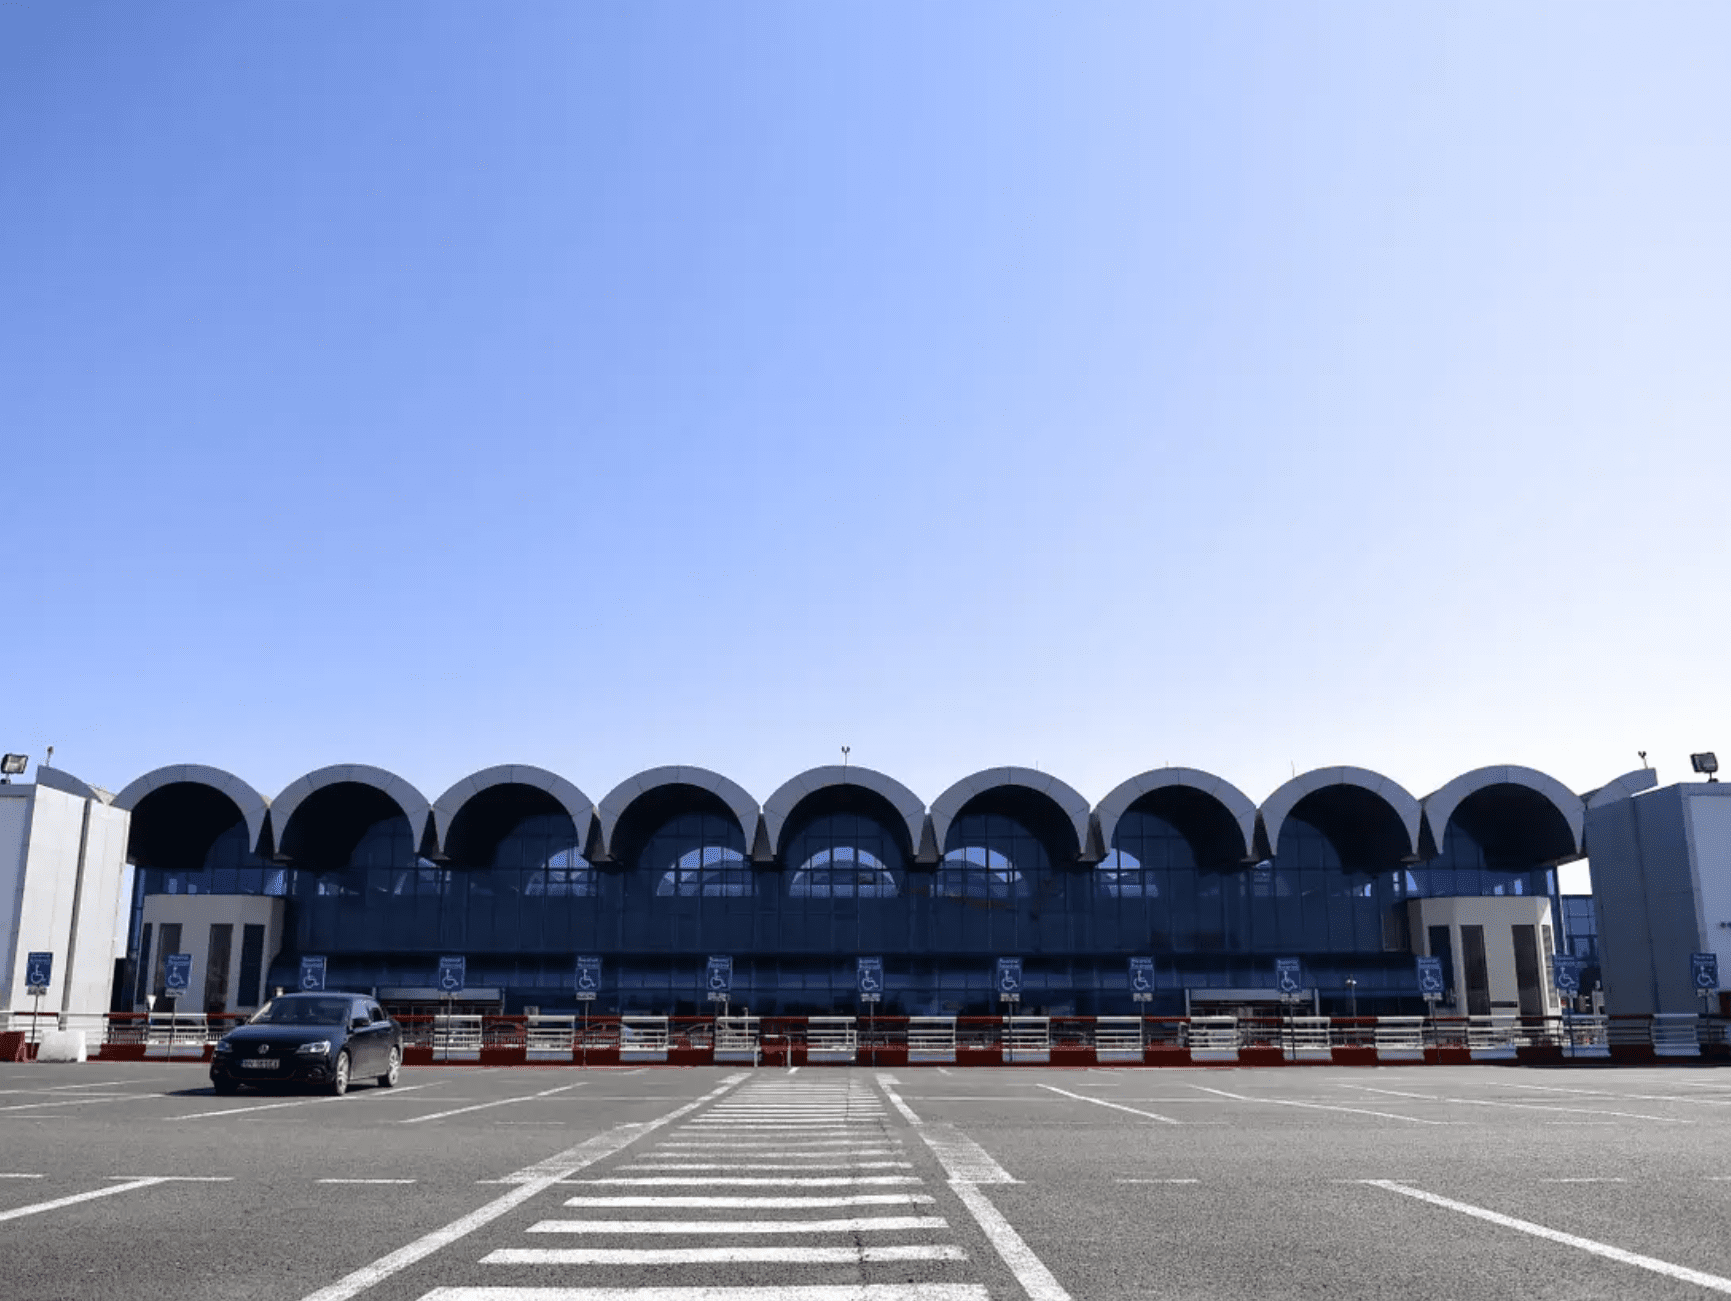 Bucharest Otopeni Airport